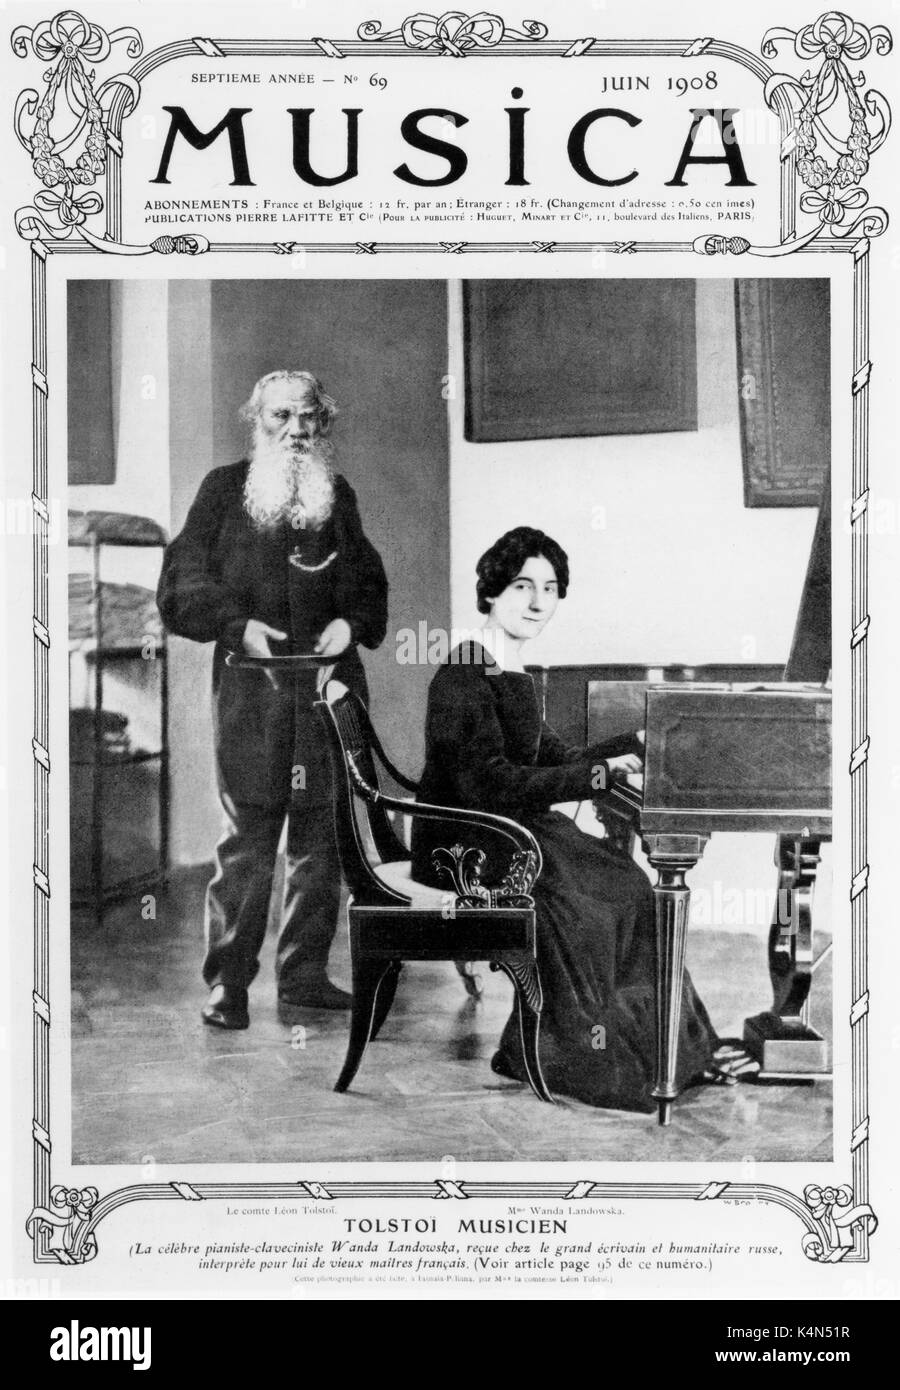 LANDOWSKA, Wanda (Alexandra)  playing harpsichord at Tolstoy's home.  Cover of 'Musica' magazine June 1908.  Polish harpsichordist & pianist (1879-1959). Stock Photo